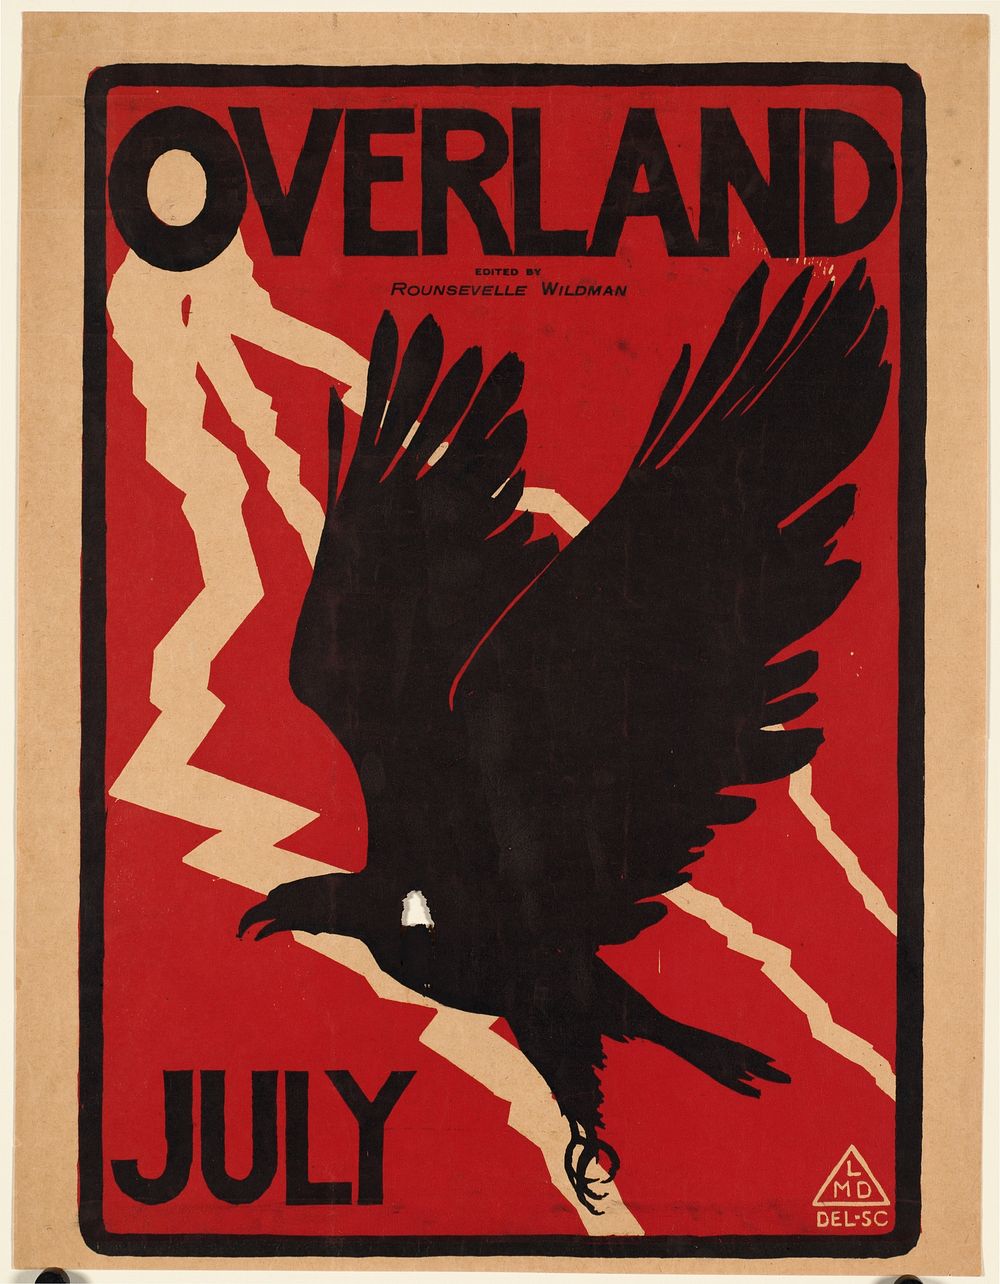             Overland, July          